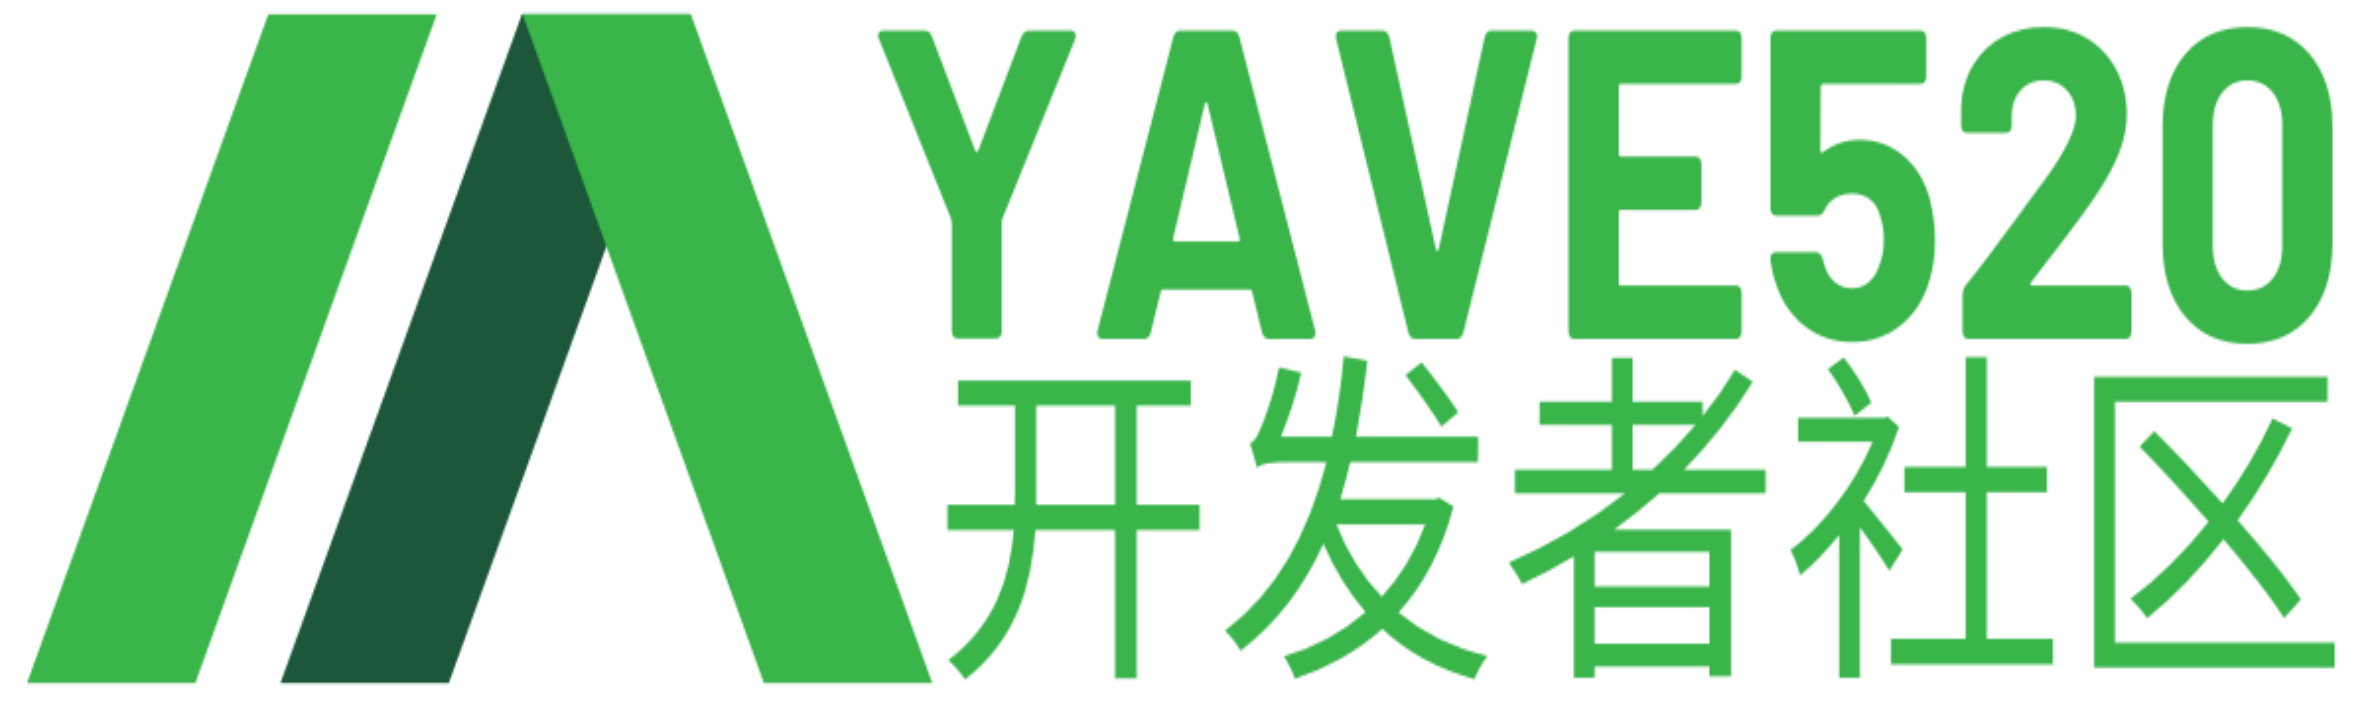 JavaScript-Yave520-专业开发者社区